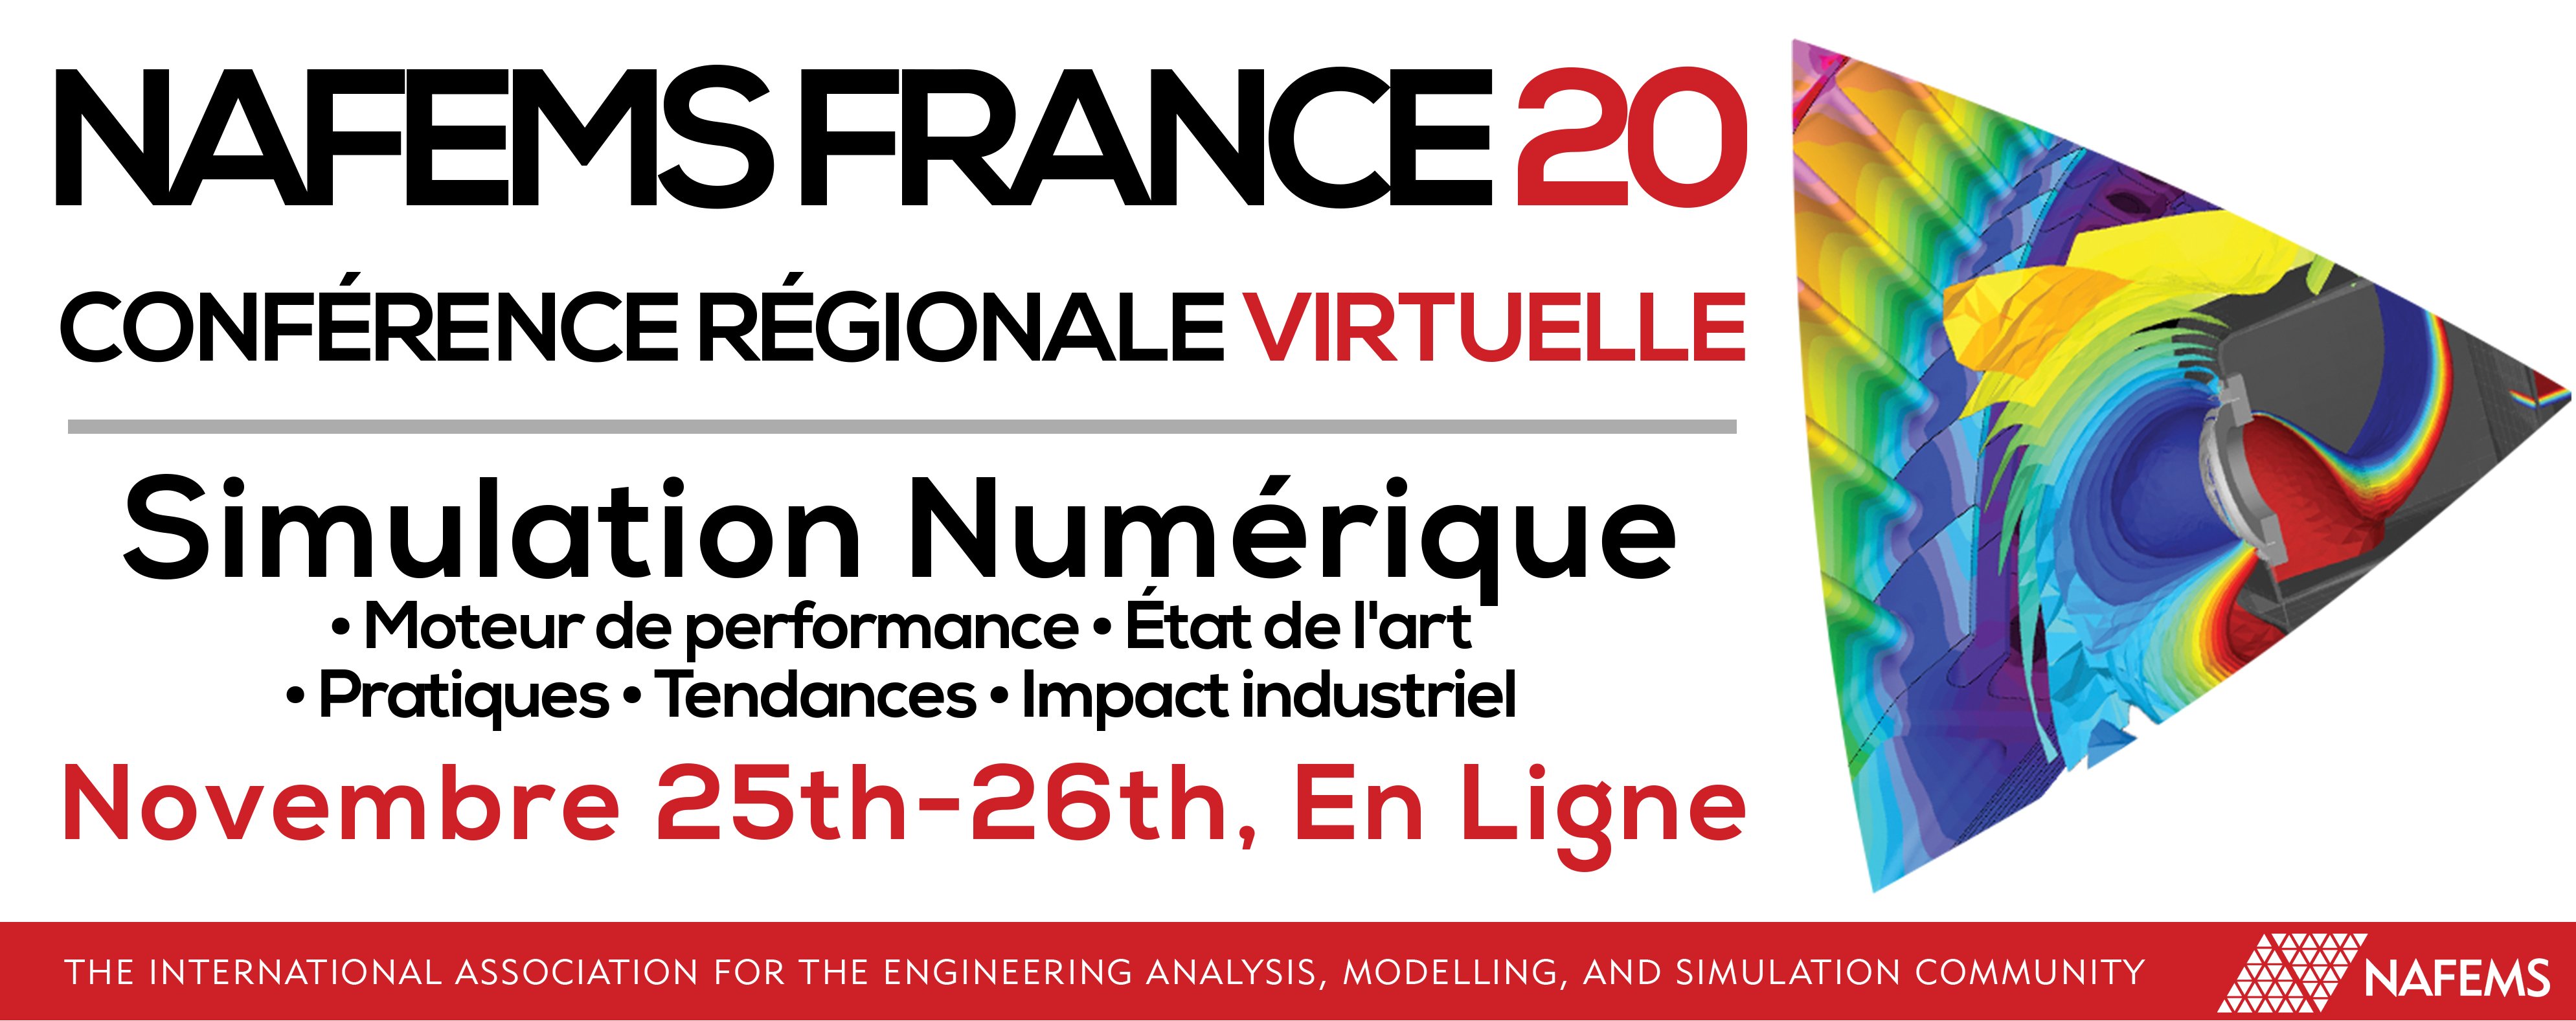 Conférence Régionale NAFEMS France 2020 